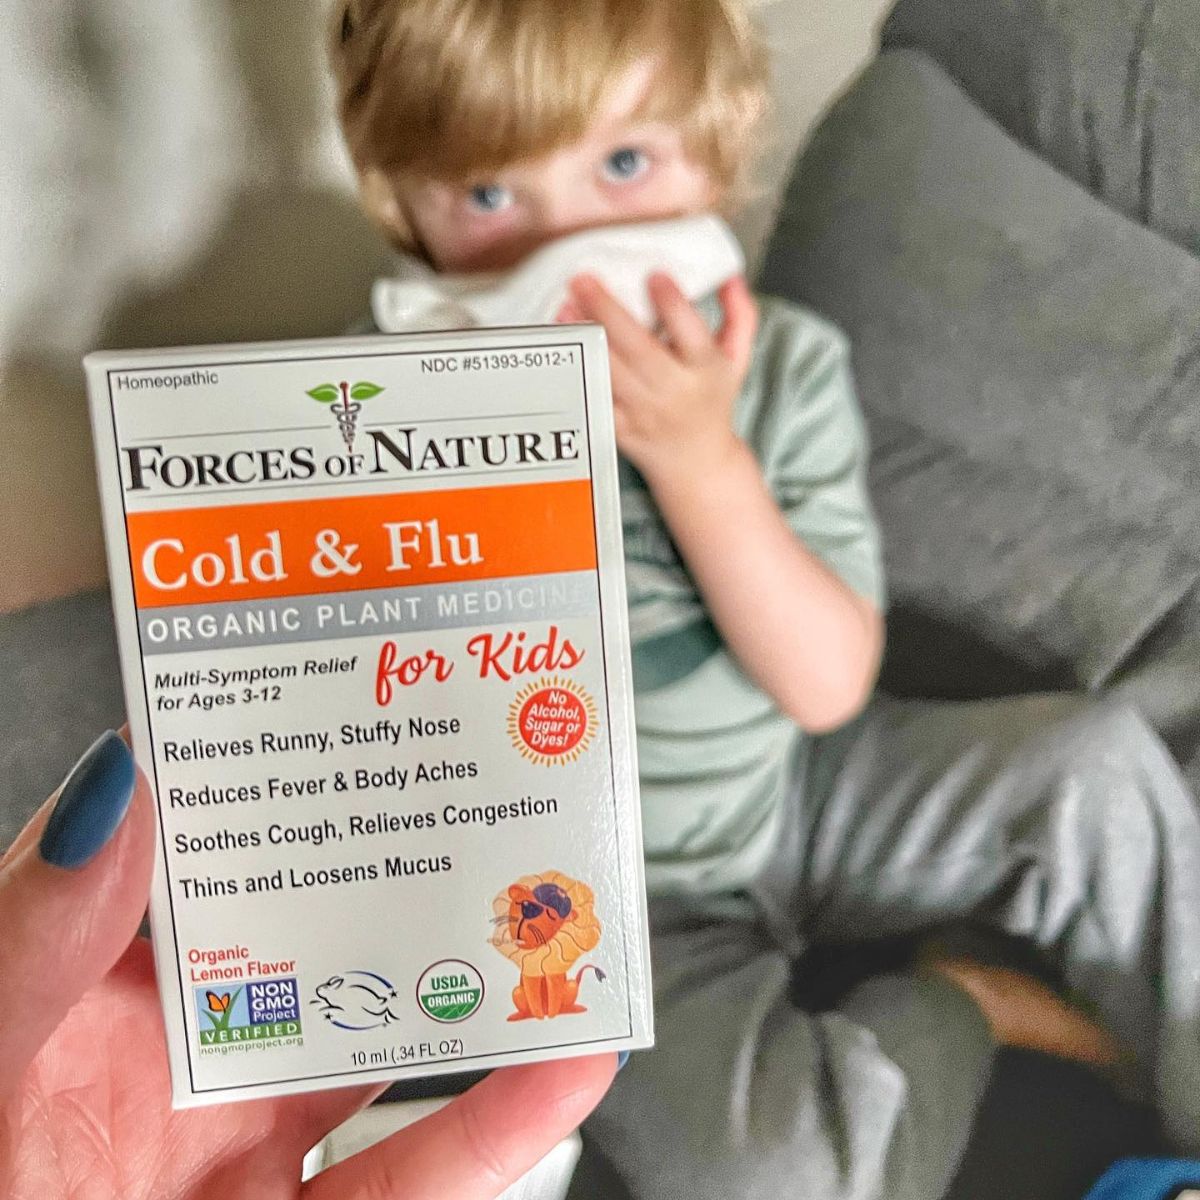 Cold & Flu for Kids